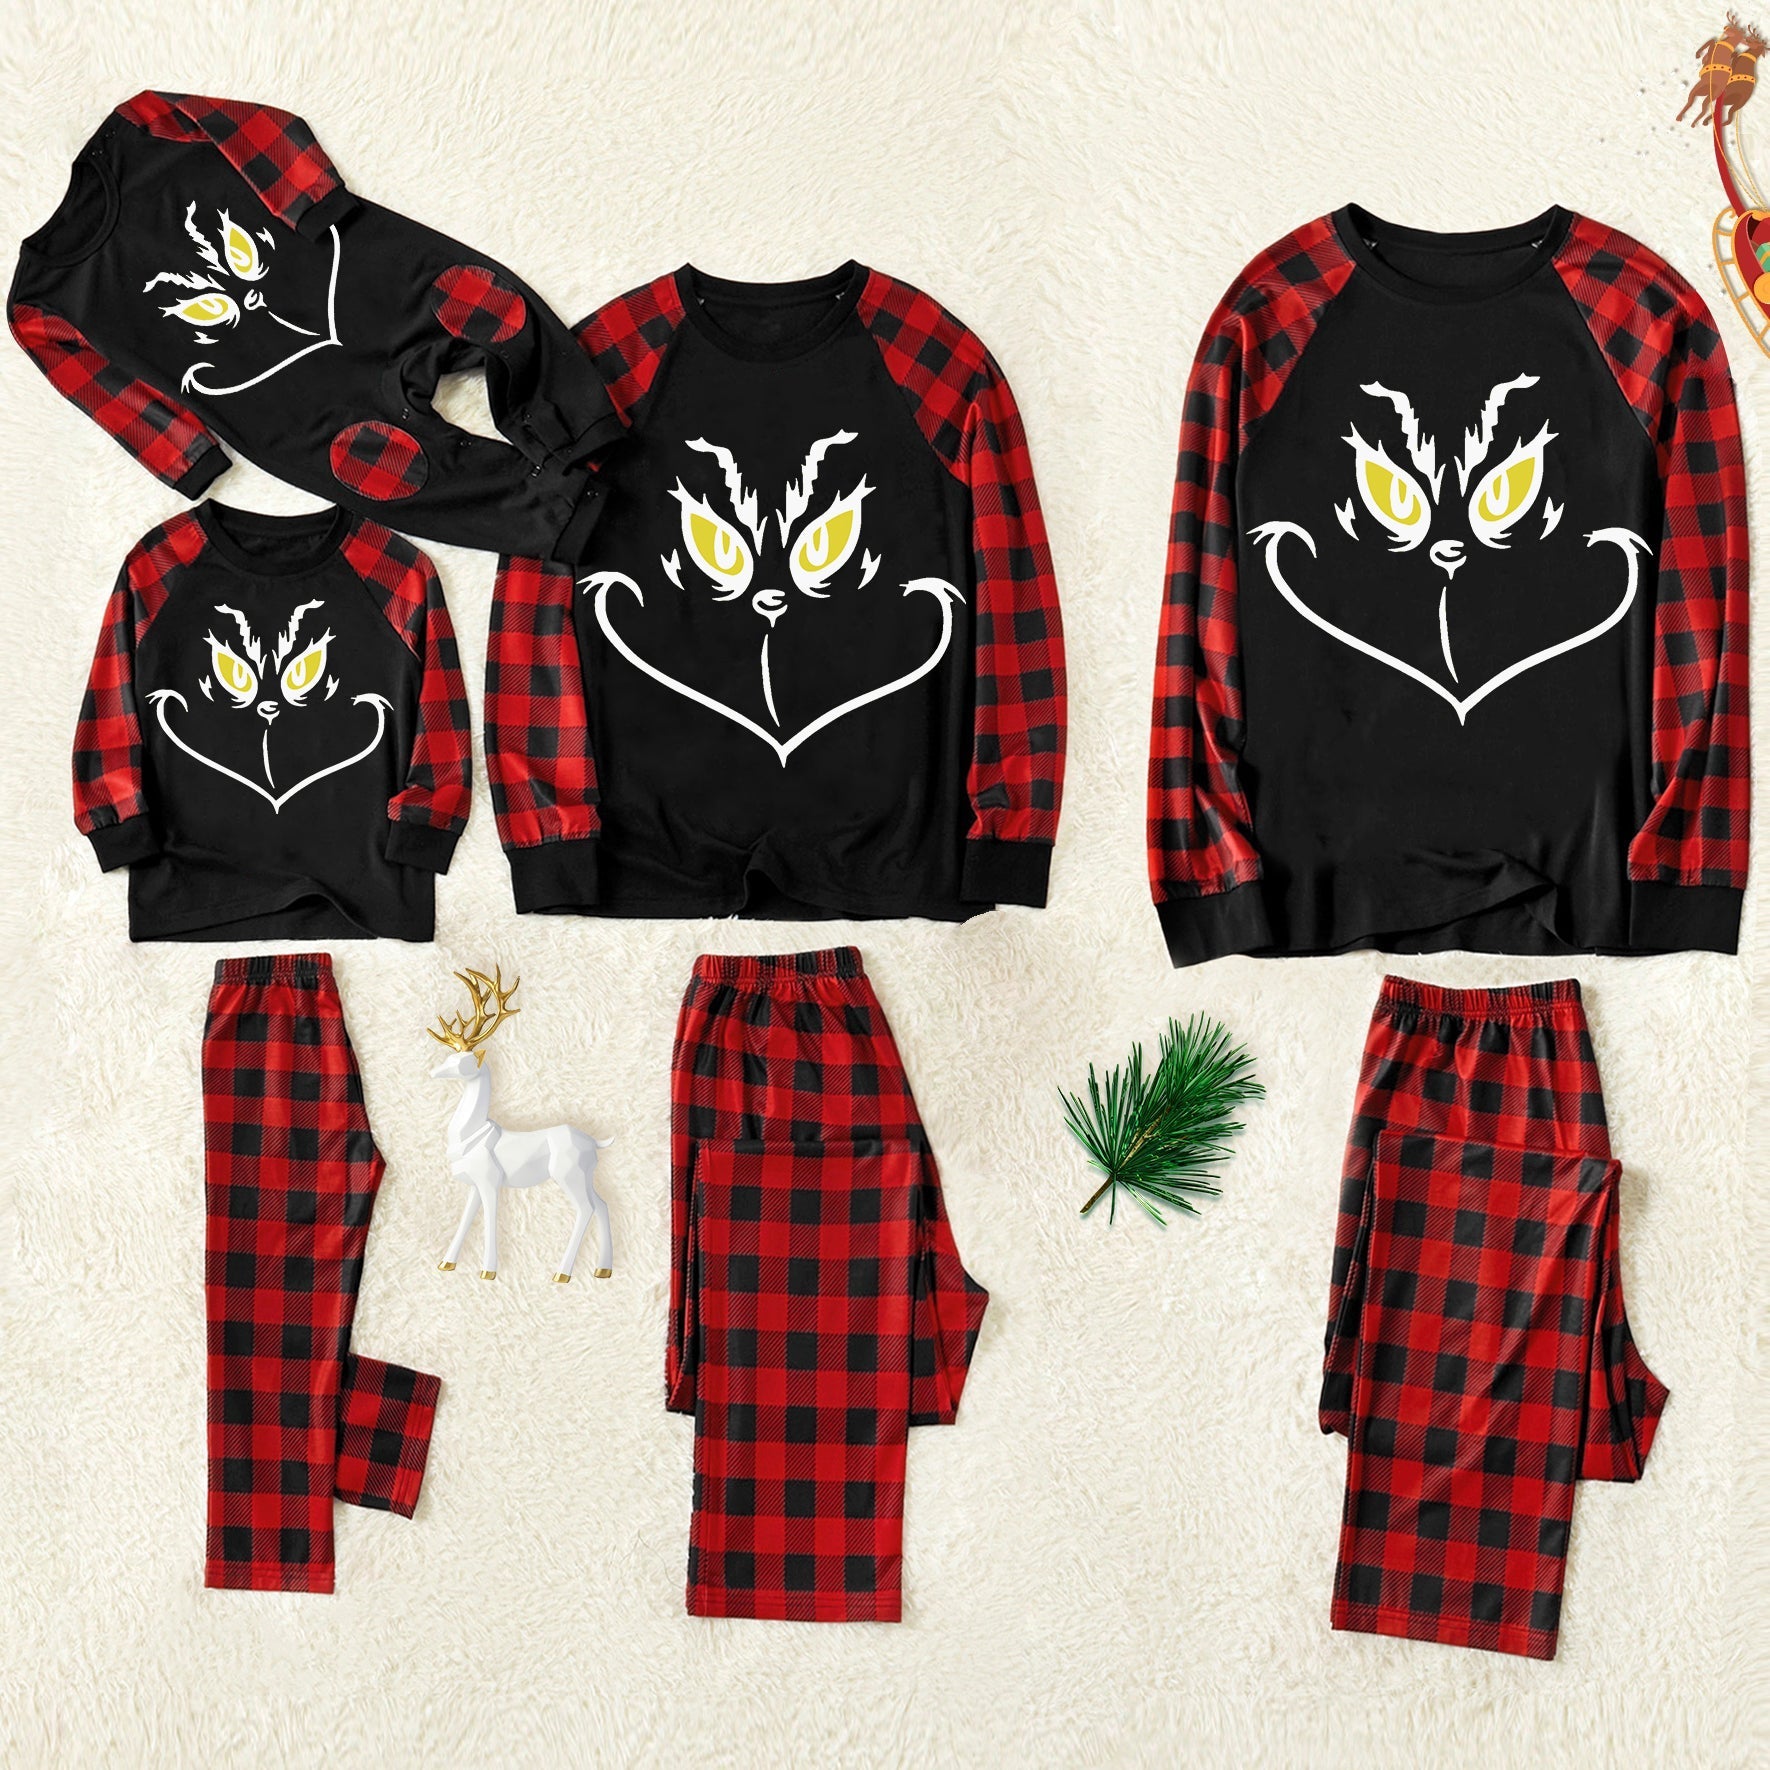 Christmas Cartoon Face Print Contrast Black Top and Black & Red Plaid Pants Family Matching Pajamas Set With Dog Bandana